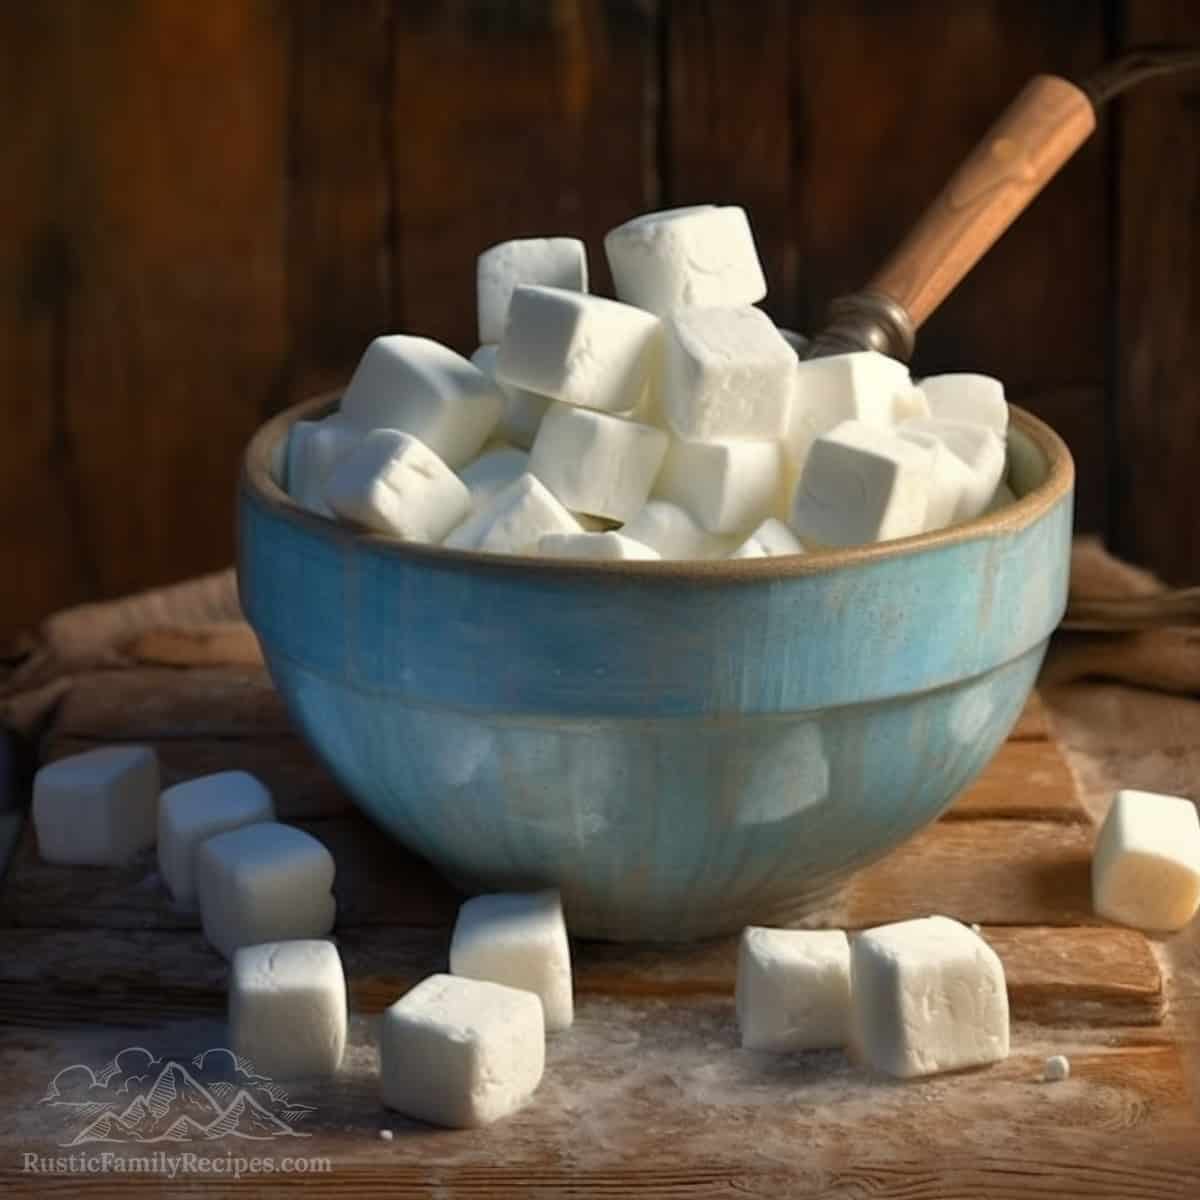 Cubes of frozen buttermilk in a rustic bowl